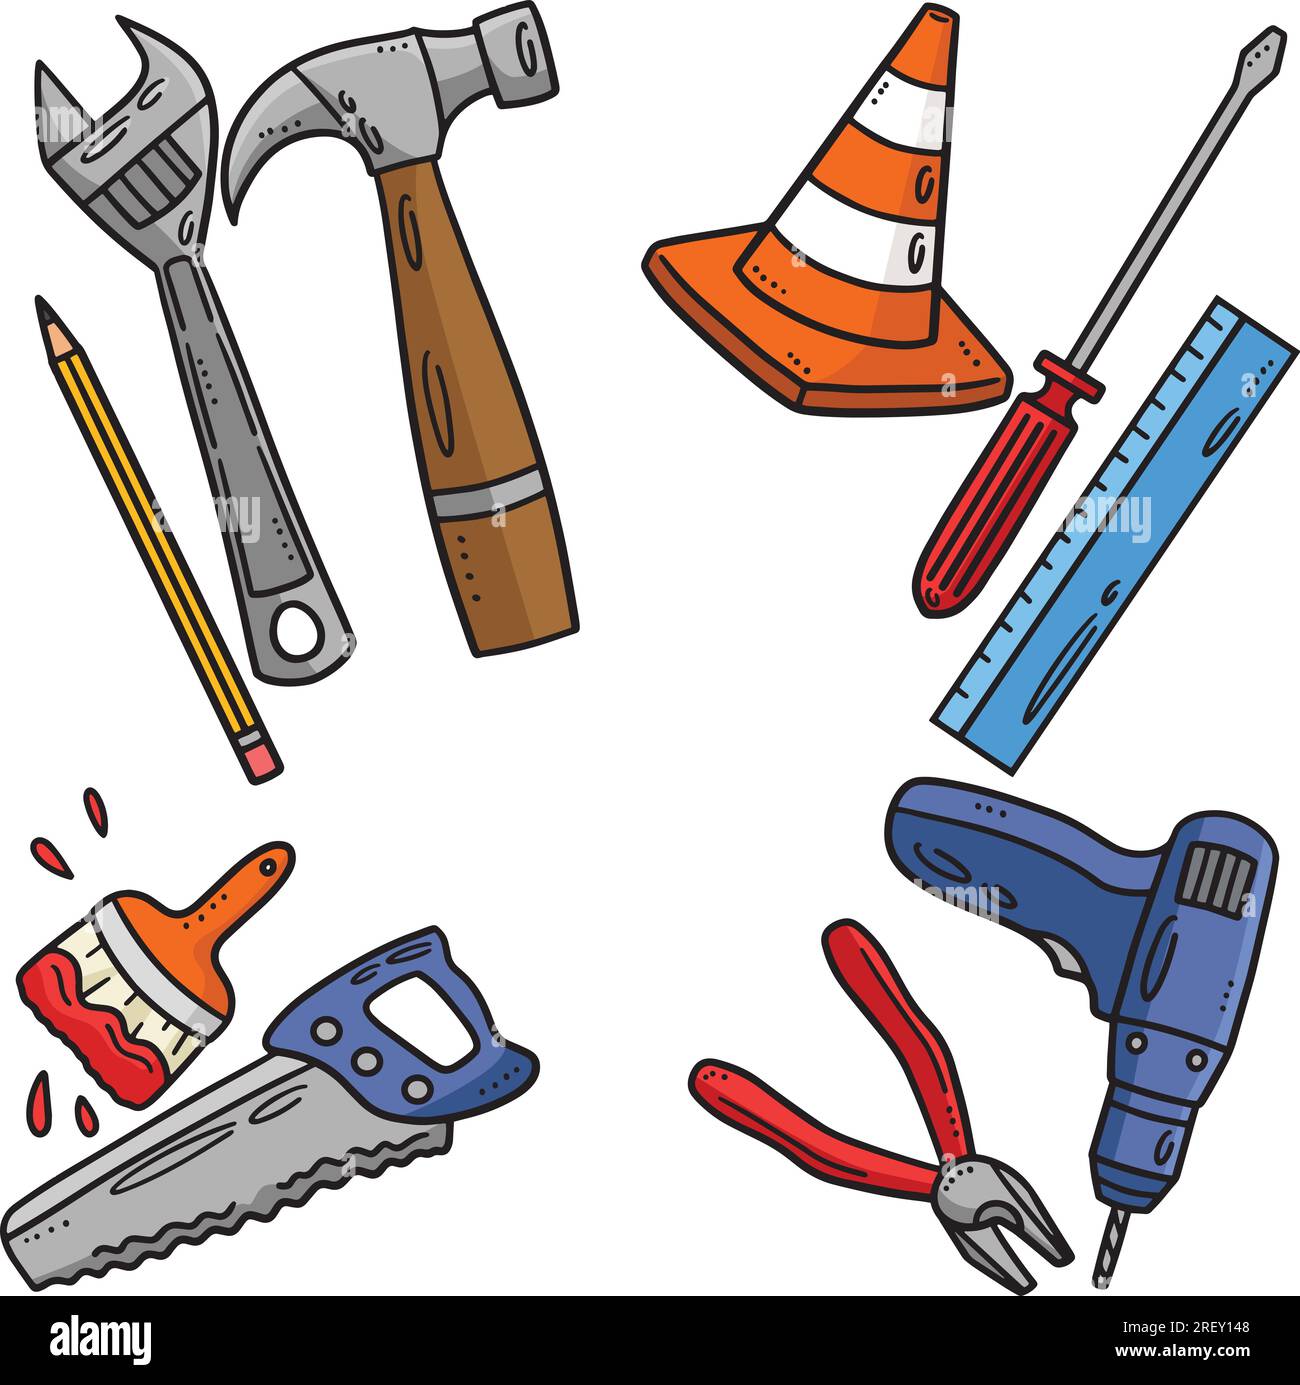 animated cartoon construction tools